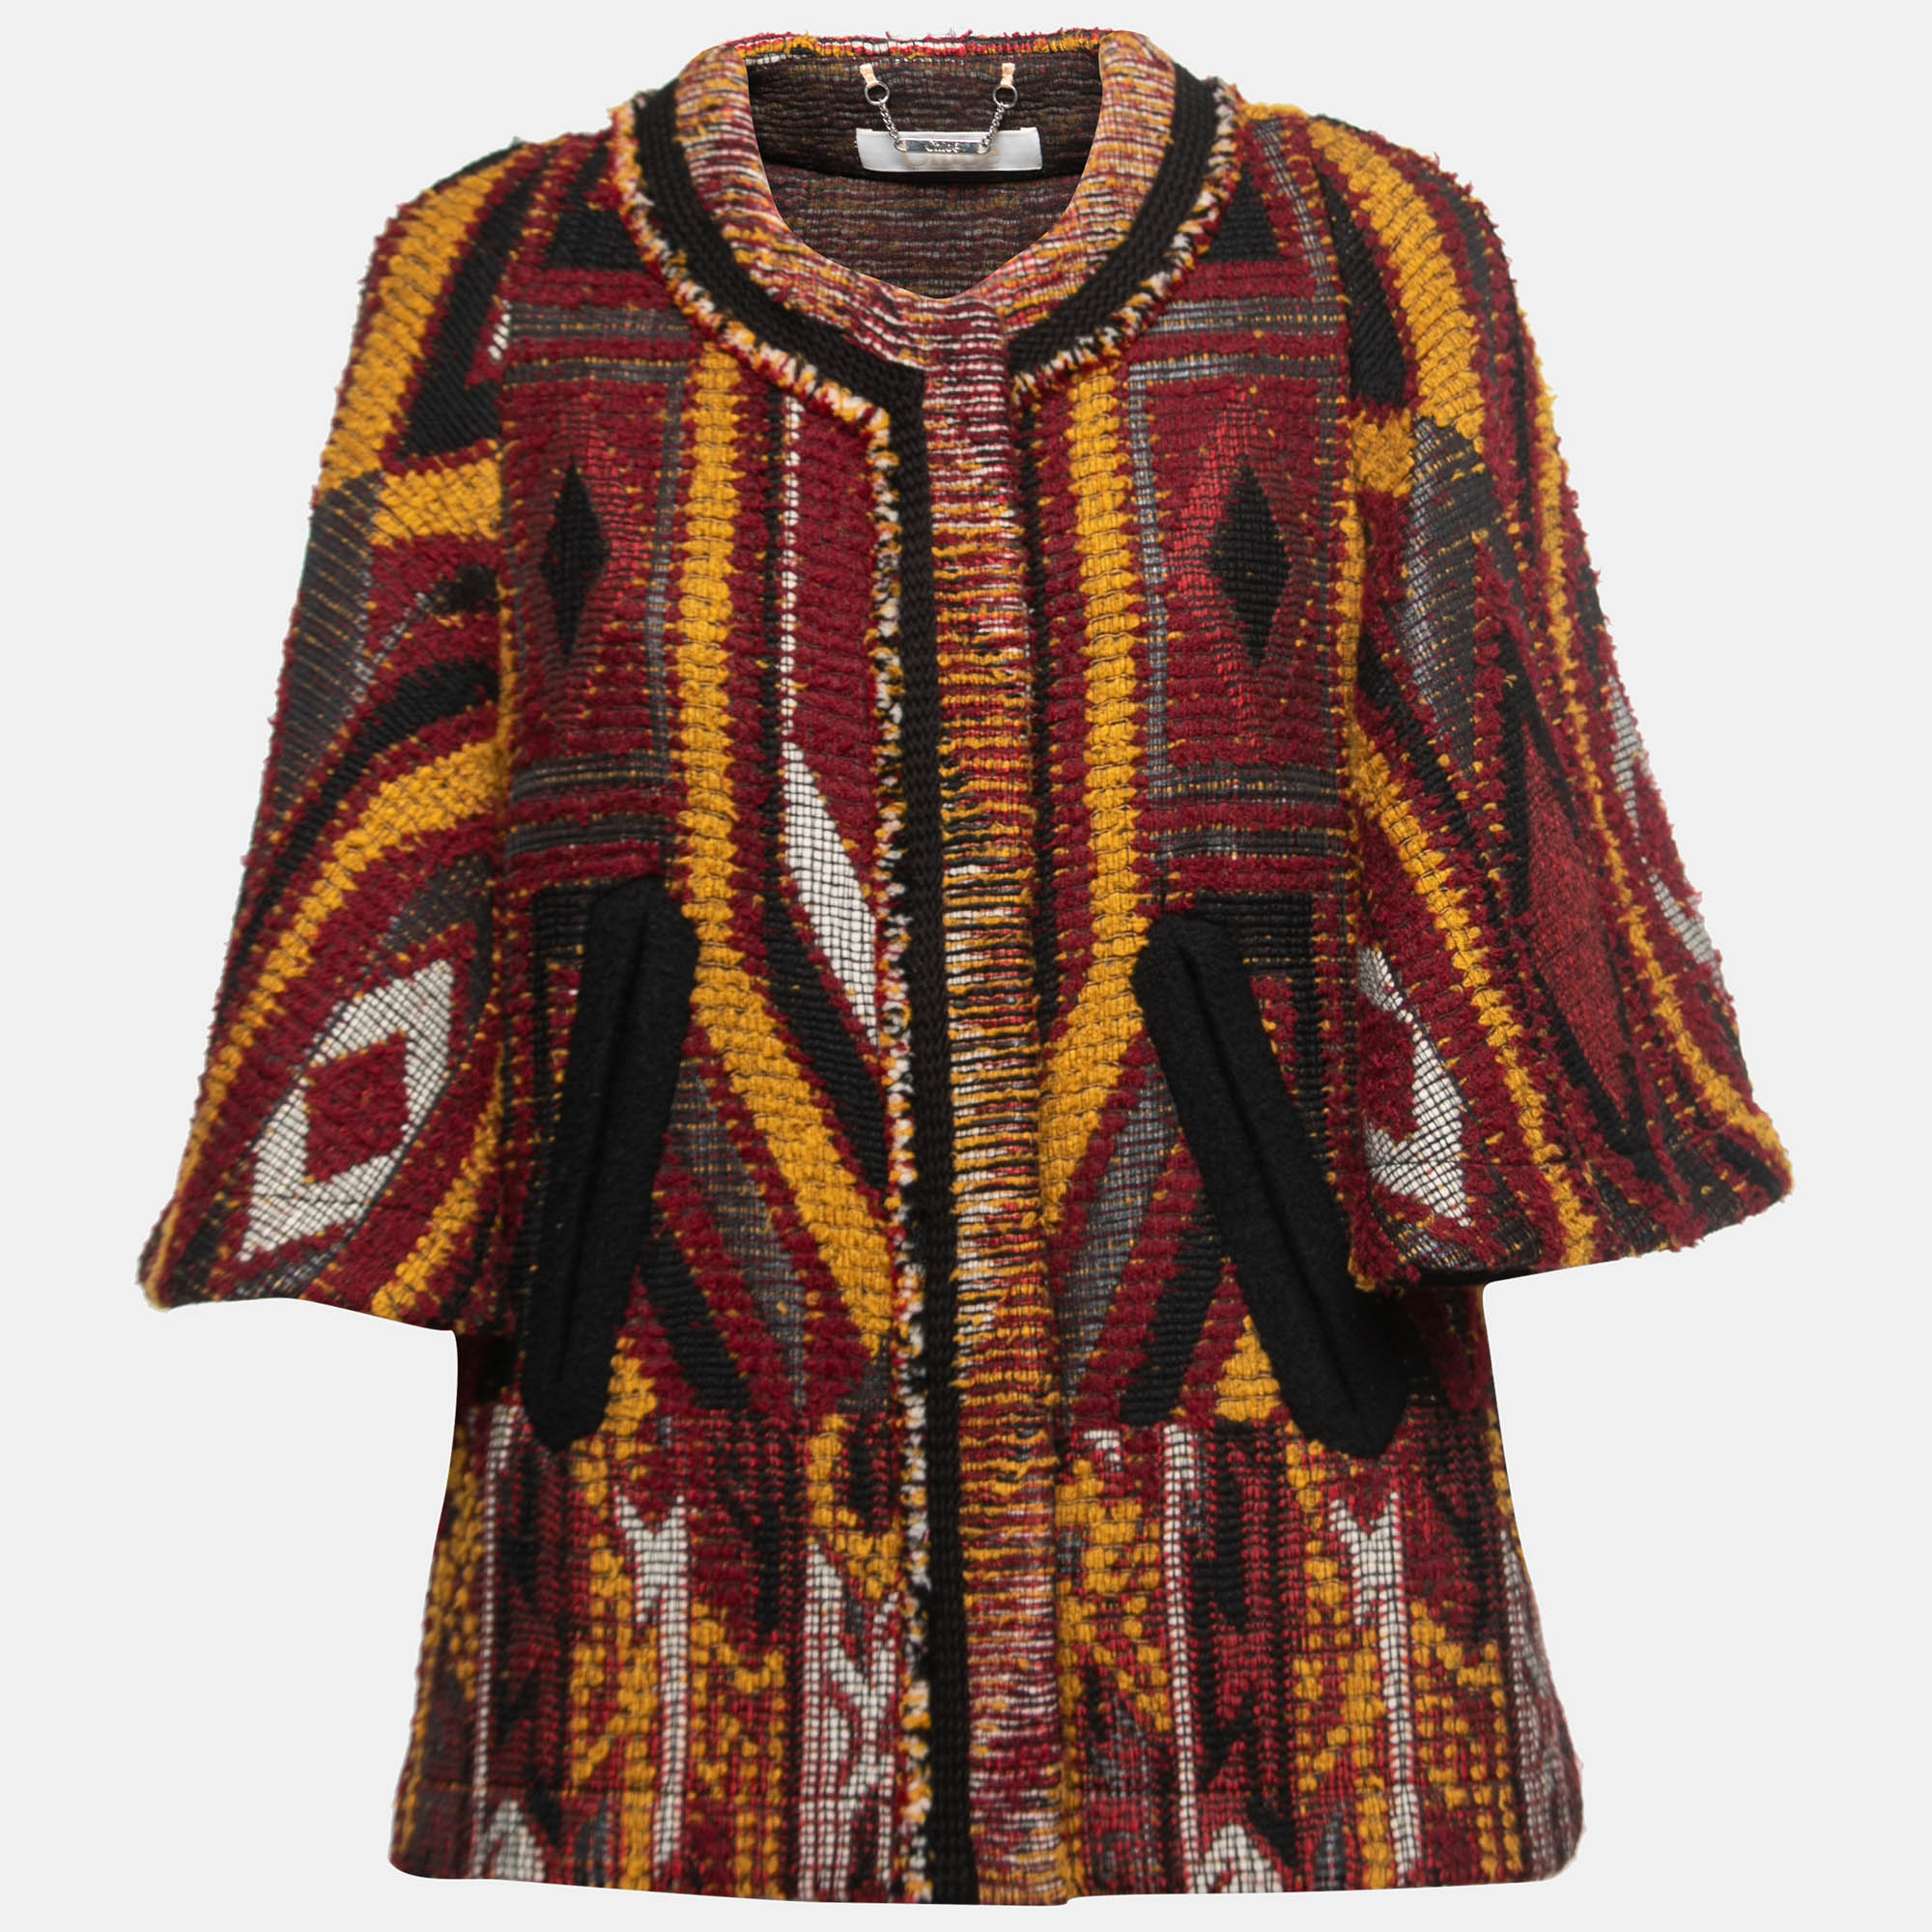 Chloe multicolor tribal patterned boucle tweed cape coat s